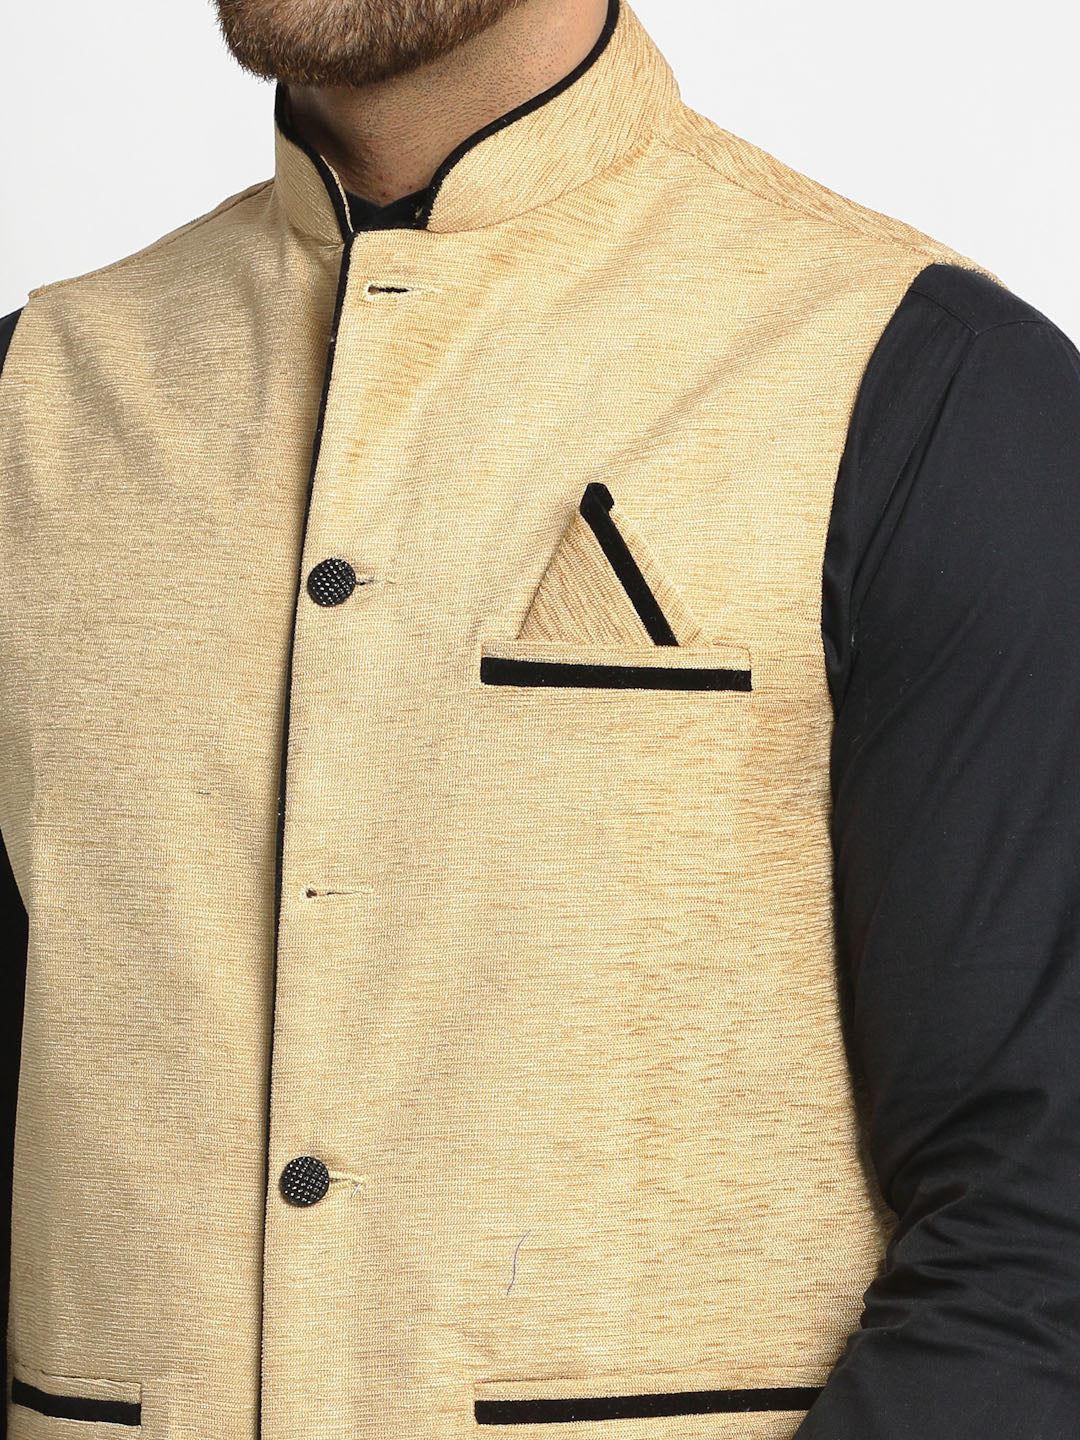 Jompers Men's Beige Solid Nehru Jacket with Square Pocket ( JOWC 4024Beige )